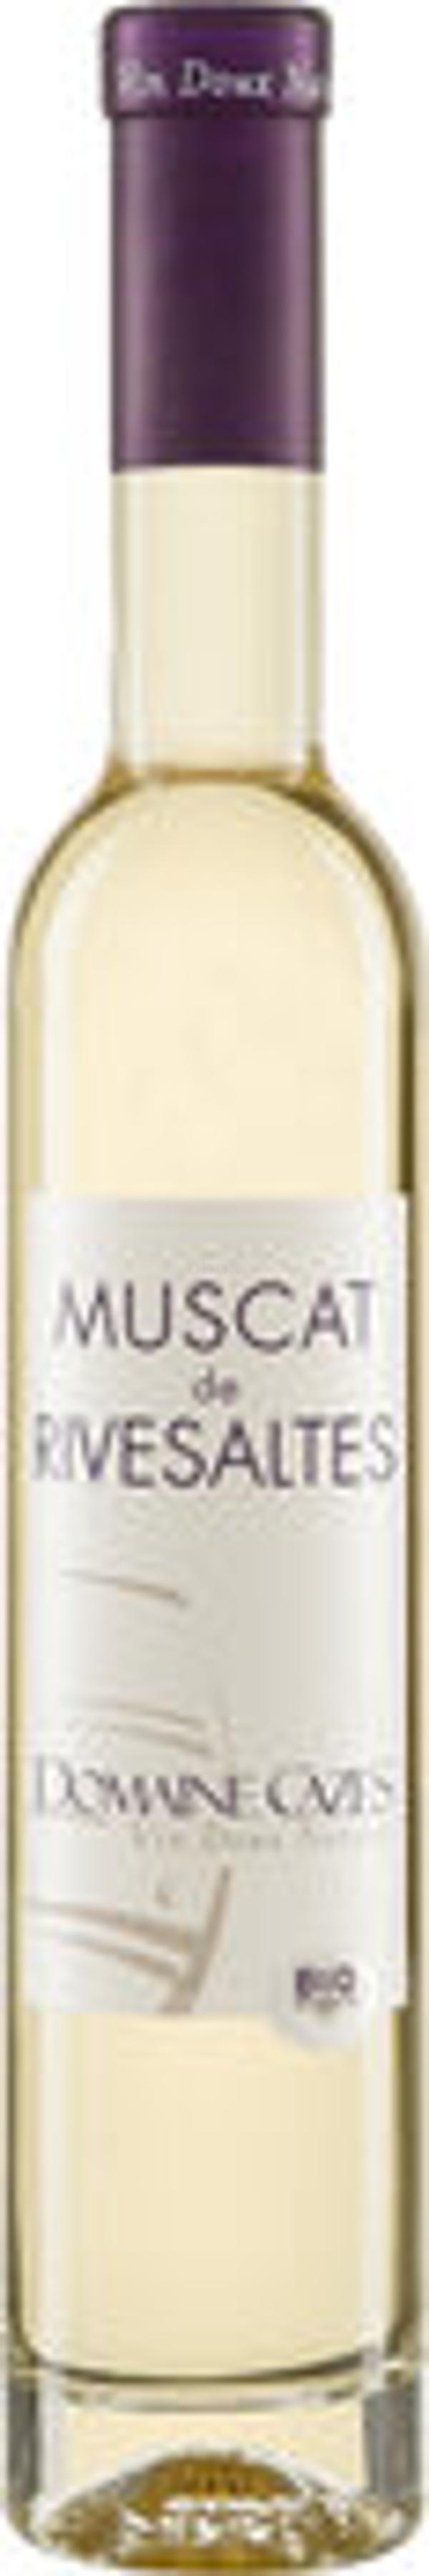 Produktfoto zu Muscat de Rivesaltes AOP Domaine Cazes, Dessertwein süß 0,375l